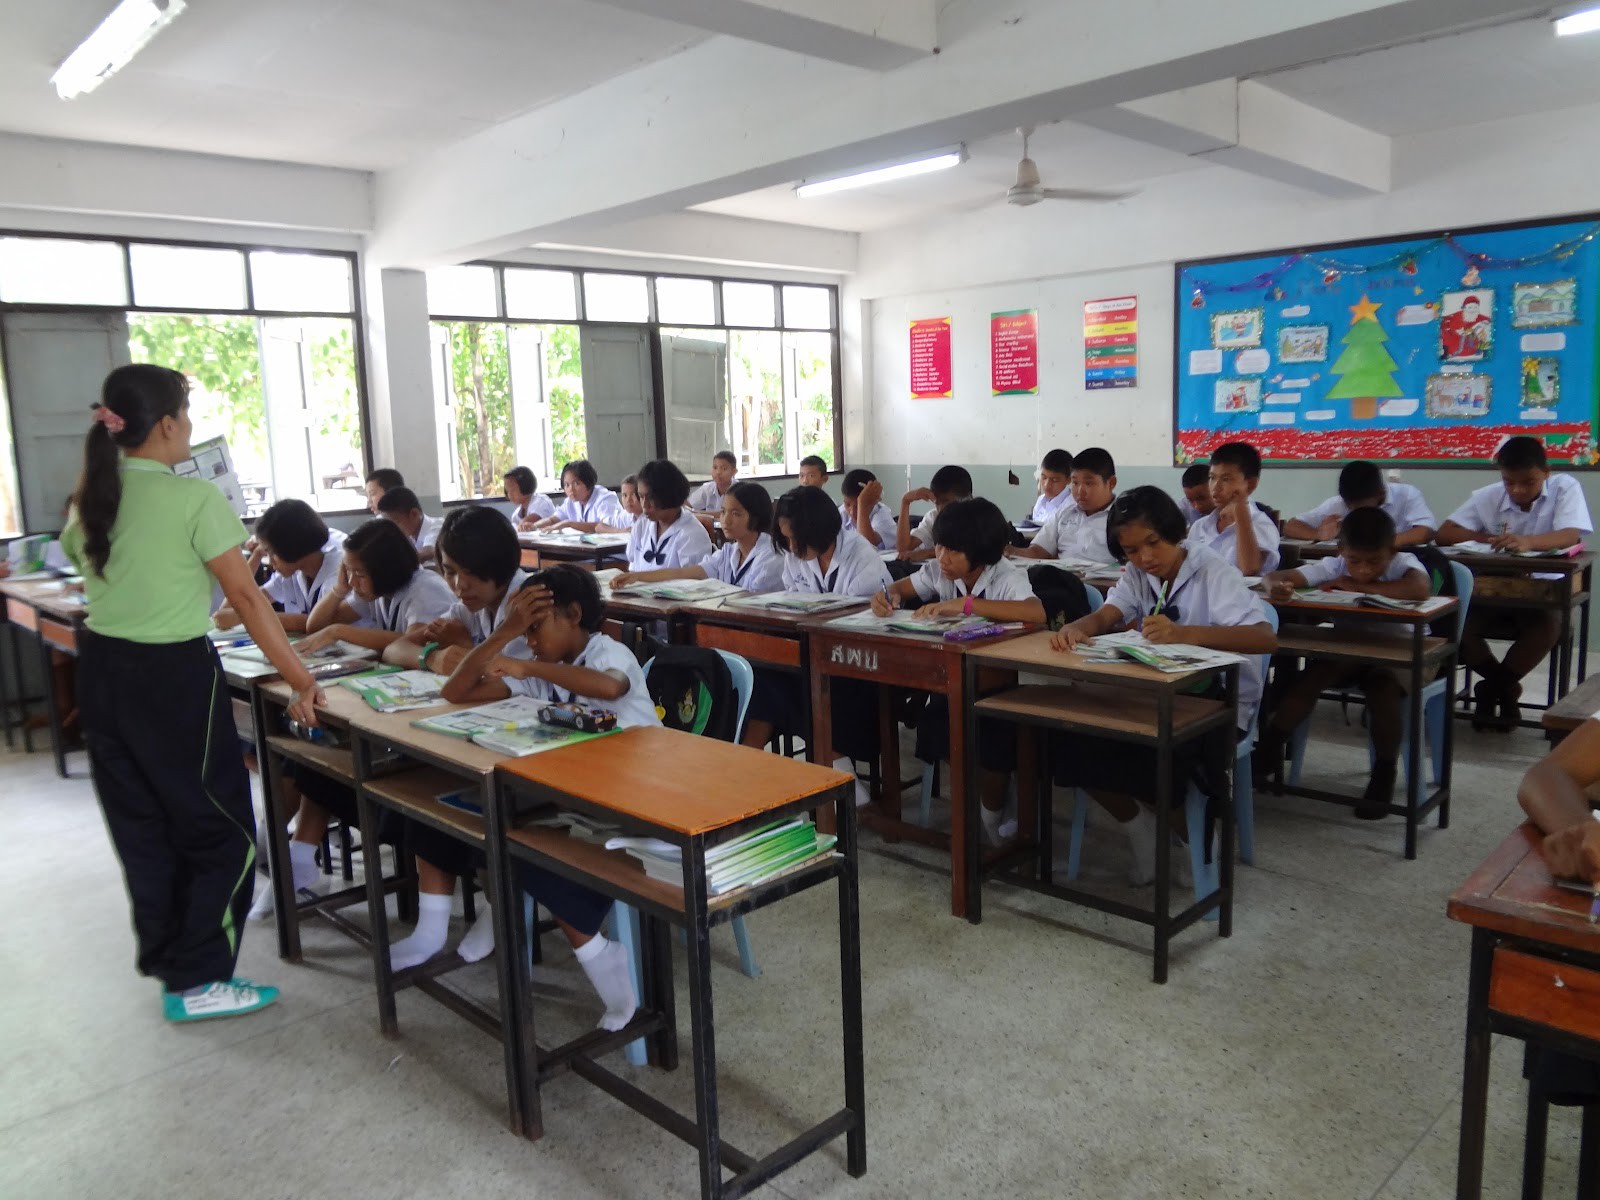 Школа тайцы. Школа дипломат Паттайя. Таиланд школьники. Школы в Тайланде. Средняя школа в Таиланде.